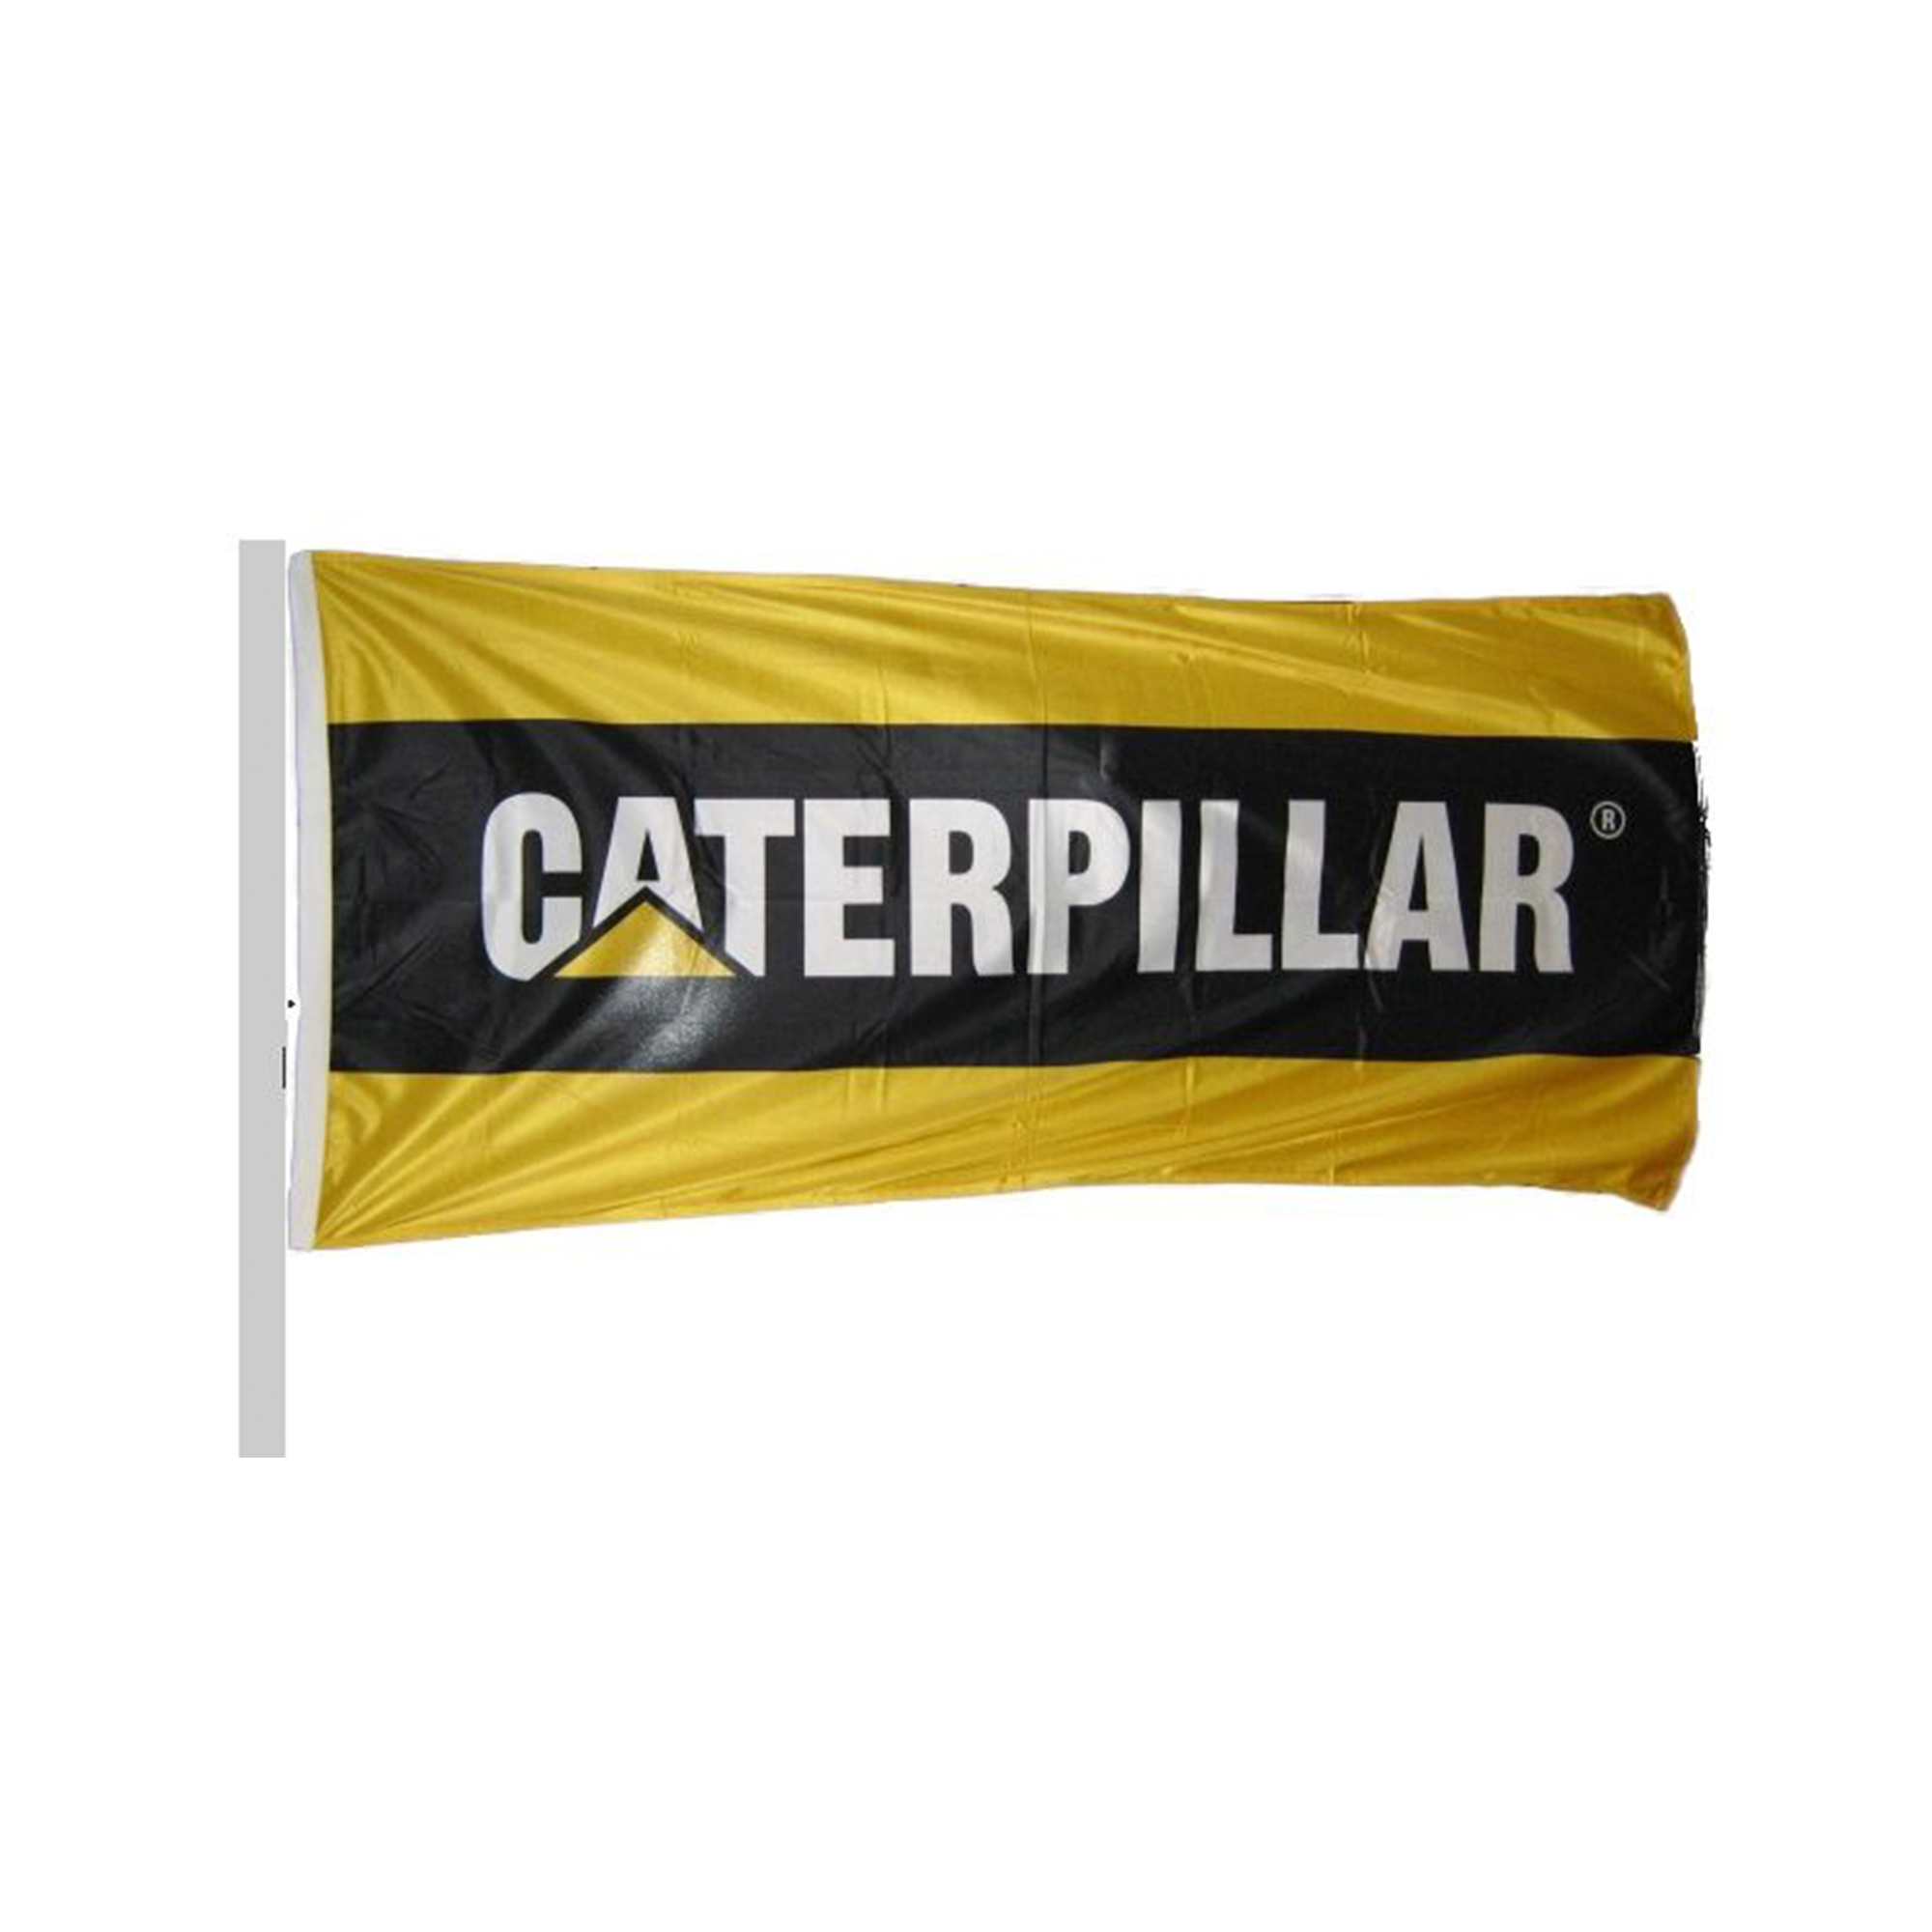 CAT - Caterpillar Black and Gold Corporate Flag